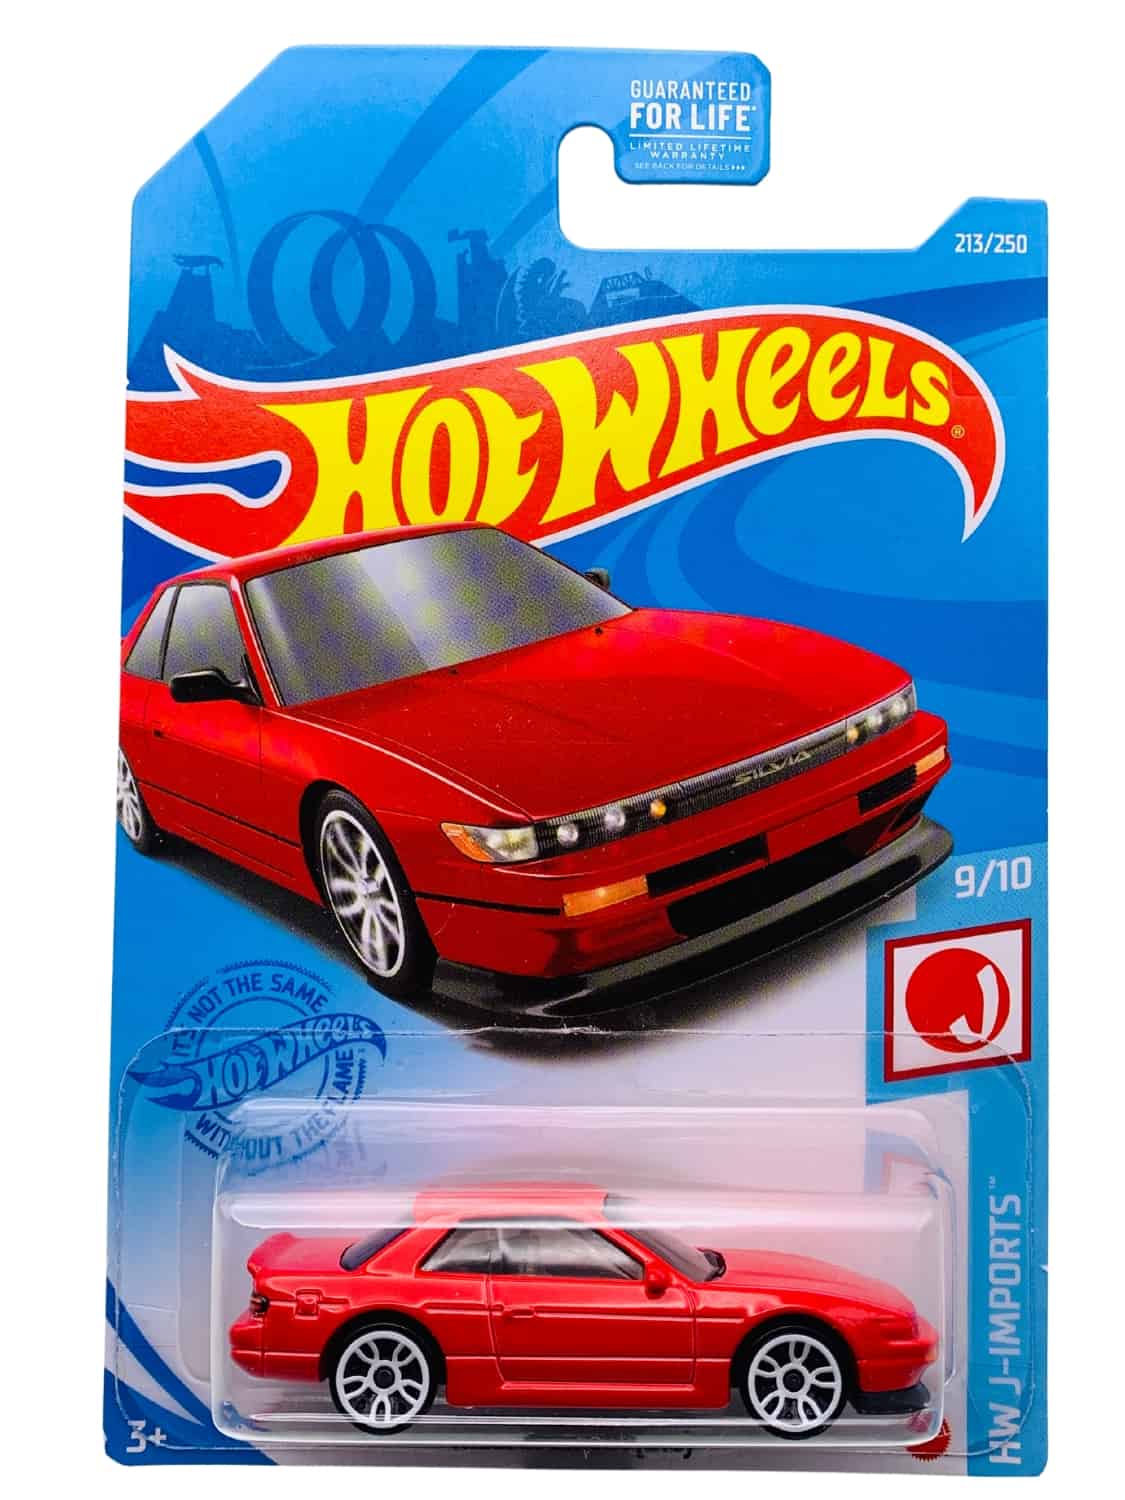 GTB07 Nissan Silvia red hot wheels